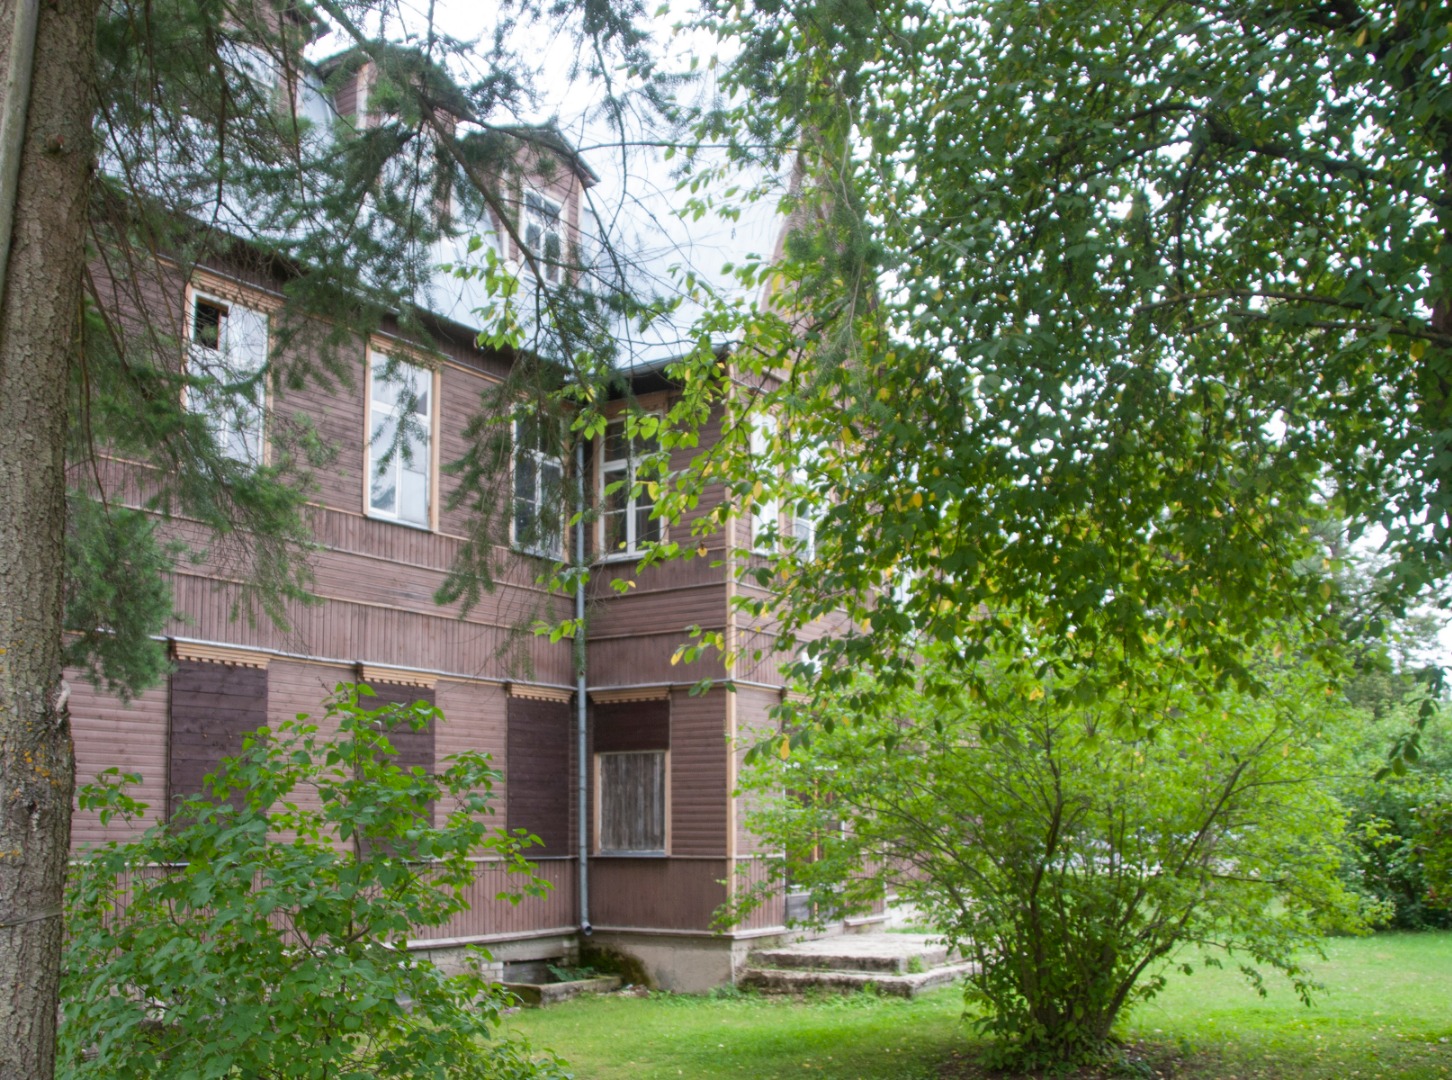 Aino Kallas's residence in Elva rephoto